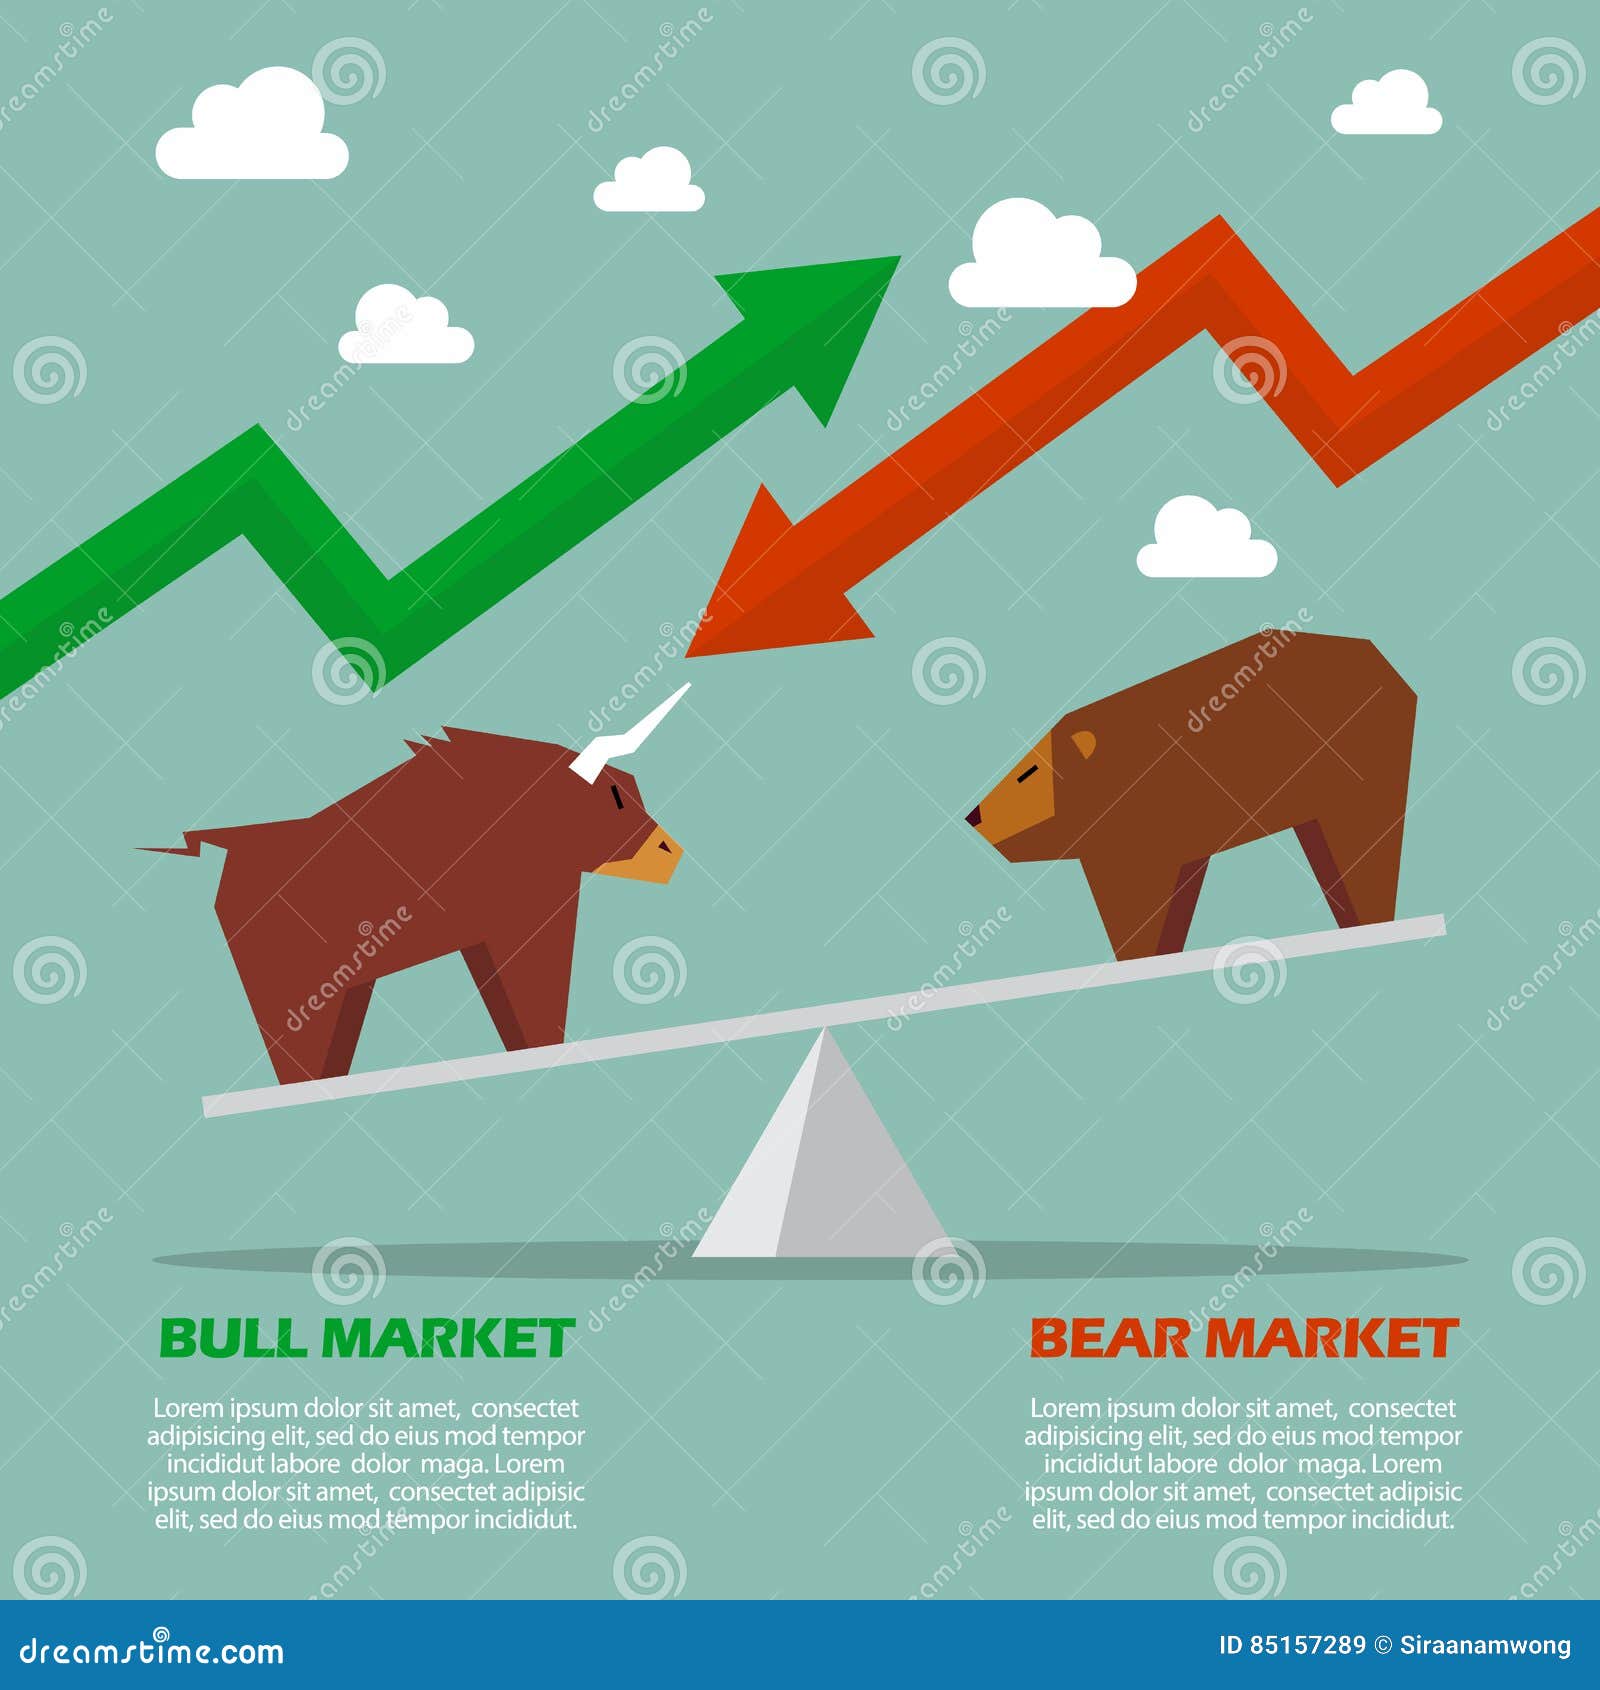 bull bear meaning stock market